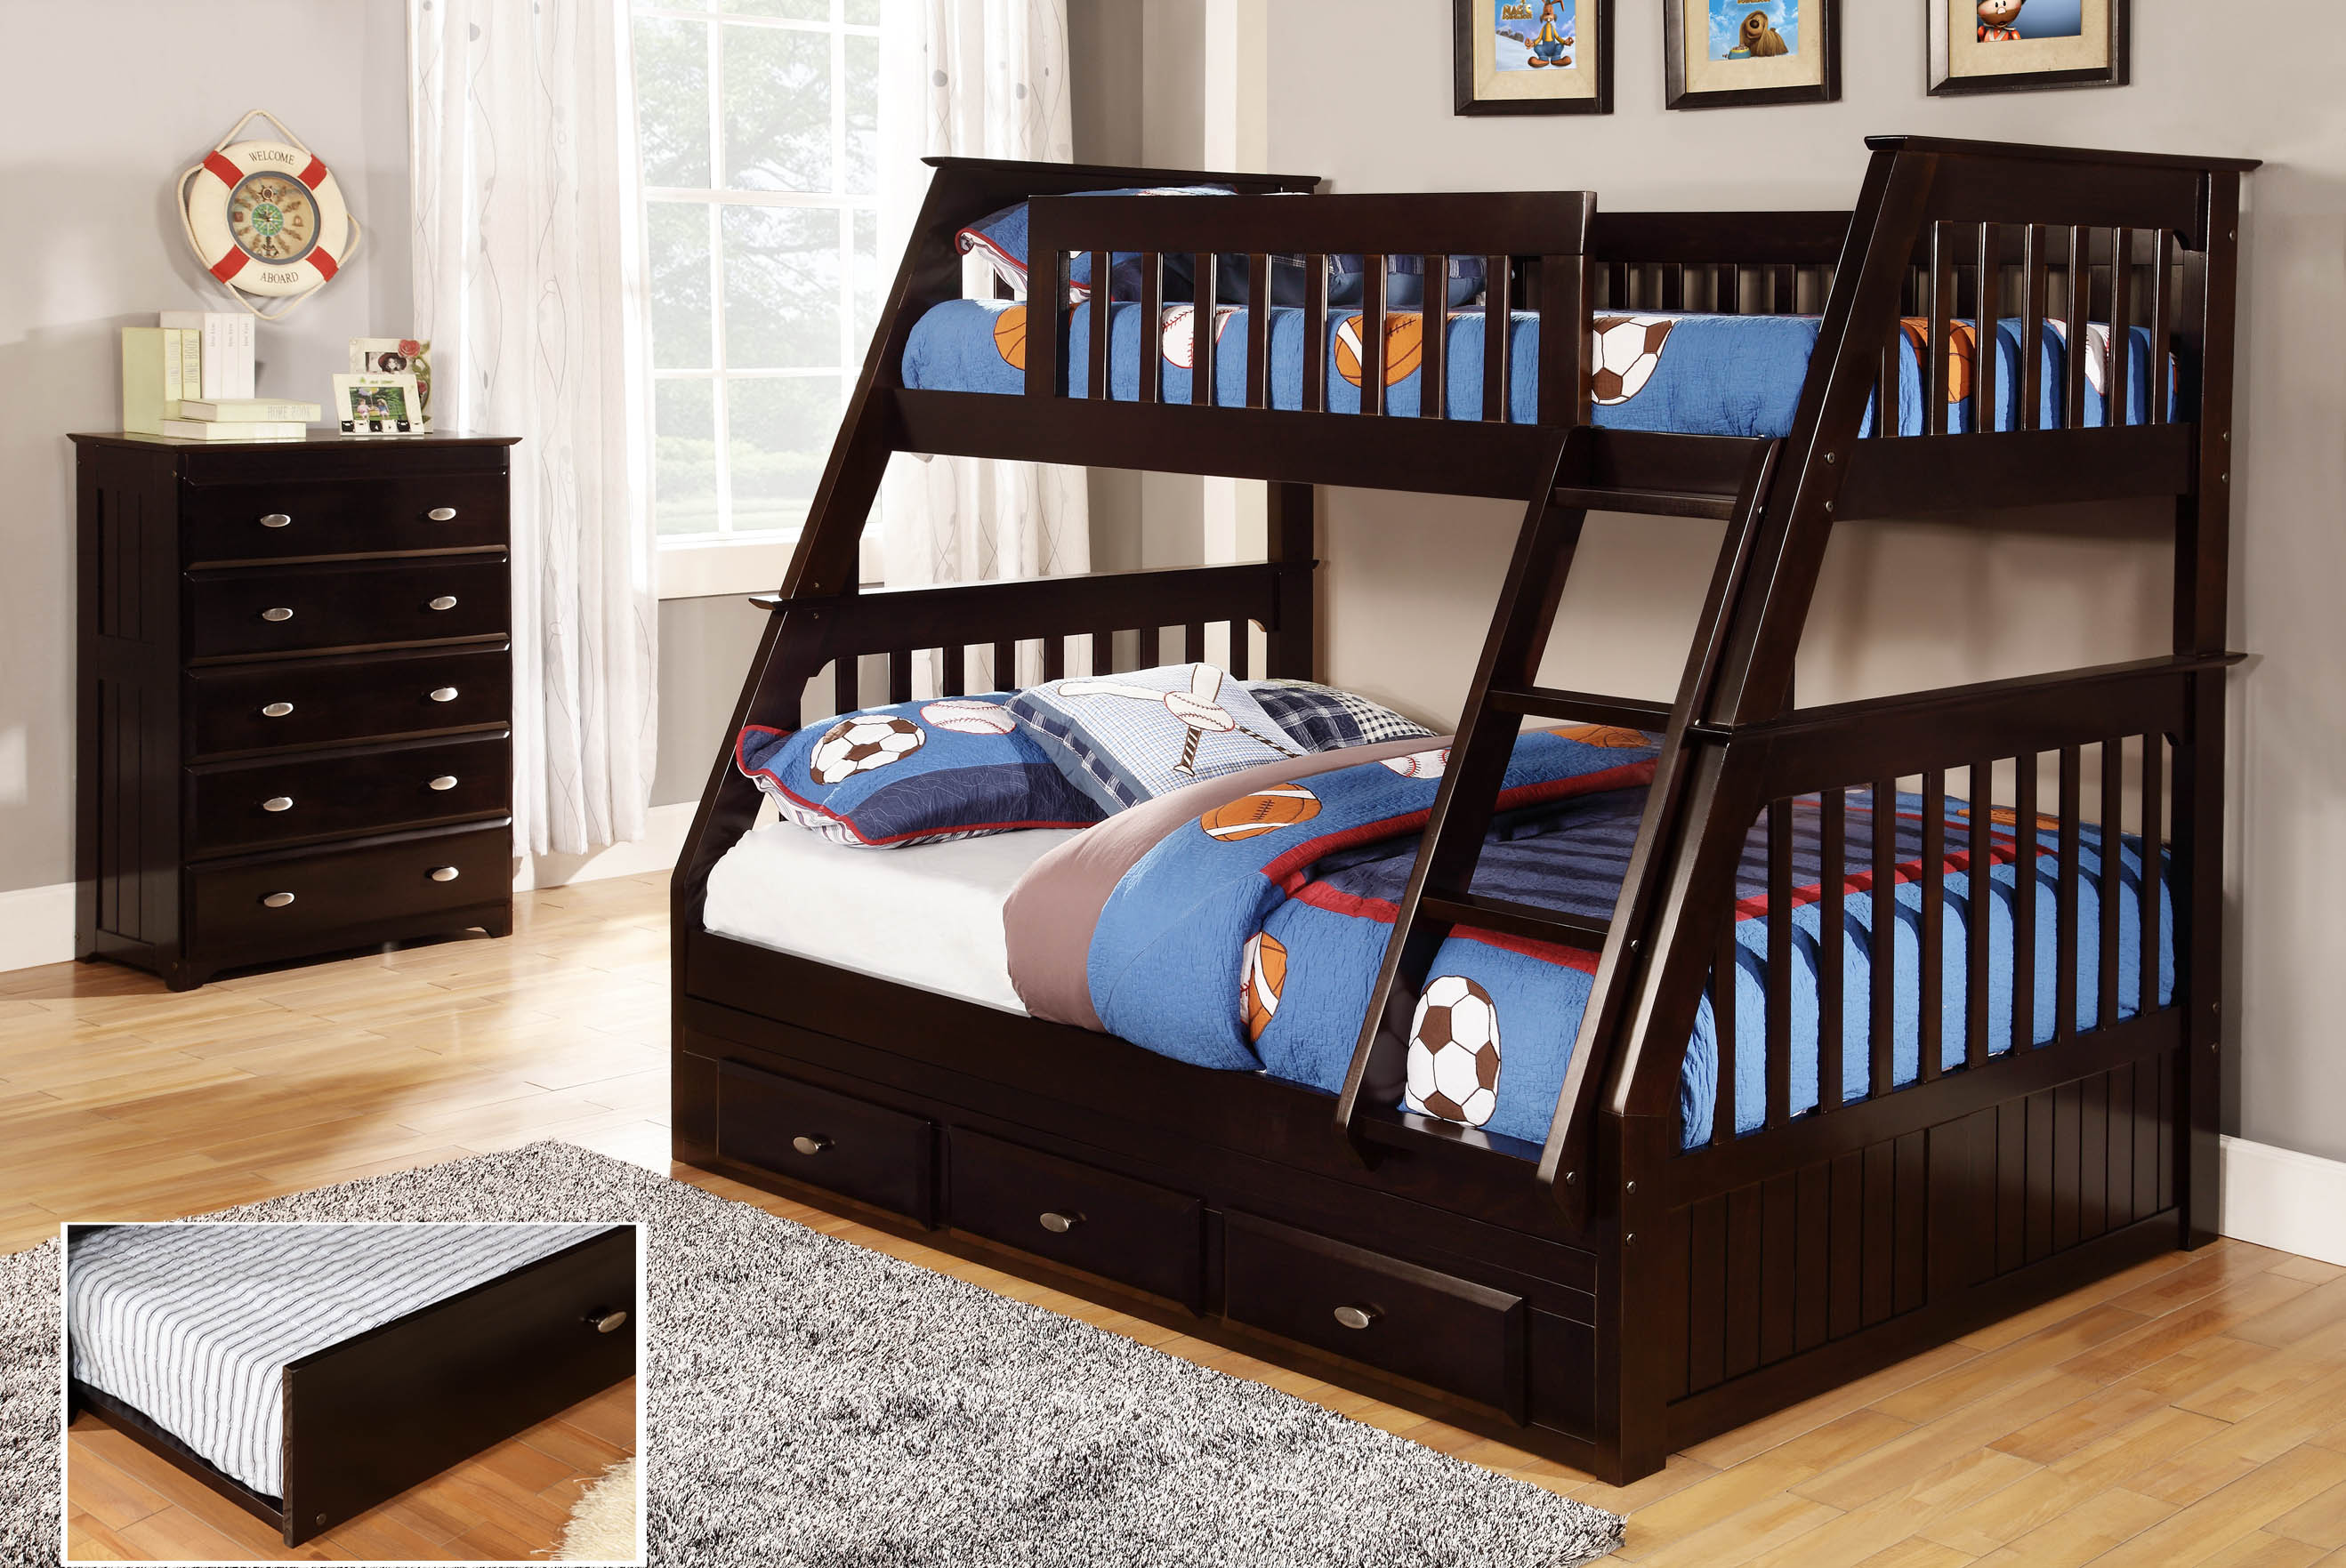 Espresso Mission Bunk Bed Kfs S, Safe Bunk Beds For Toddlers